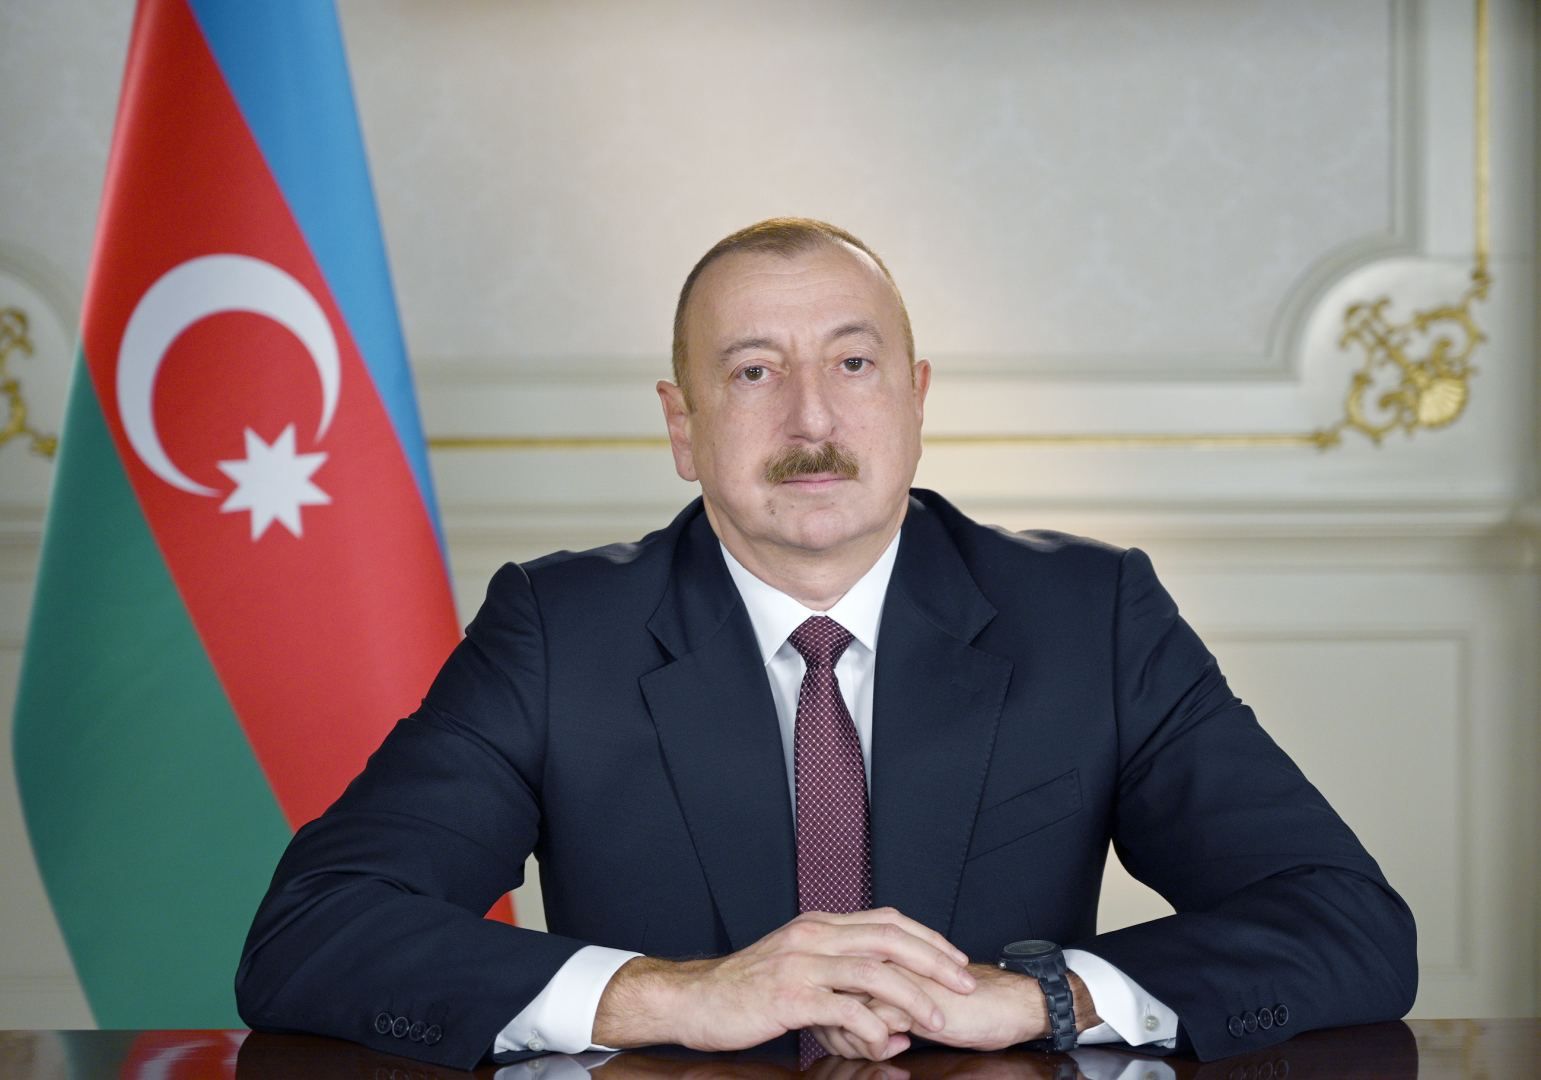 Group of Azerbaijani State Social Protection Fund's employees awarded 'Taraggi' medal – decree